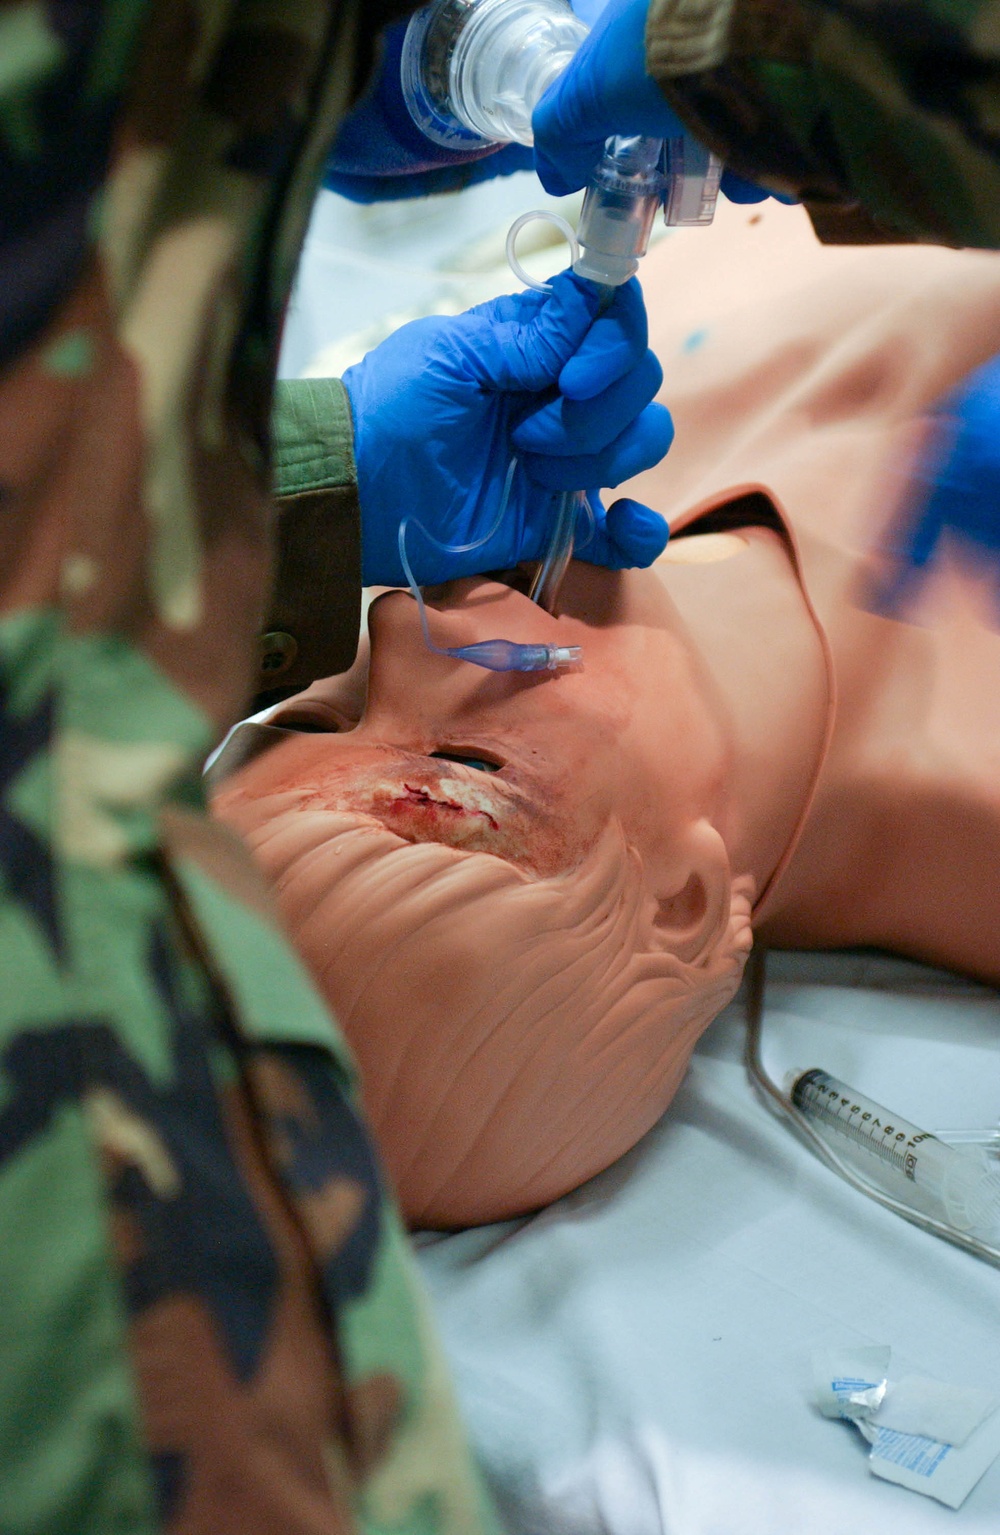 Guard members train on next generation medical simulators